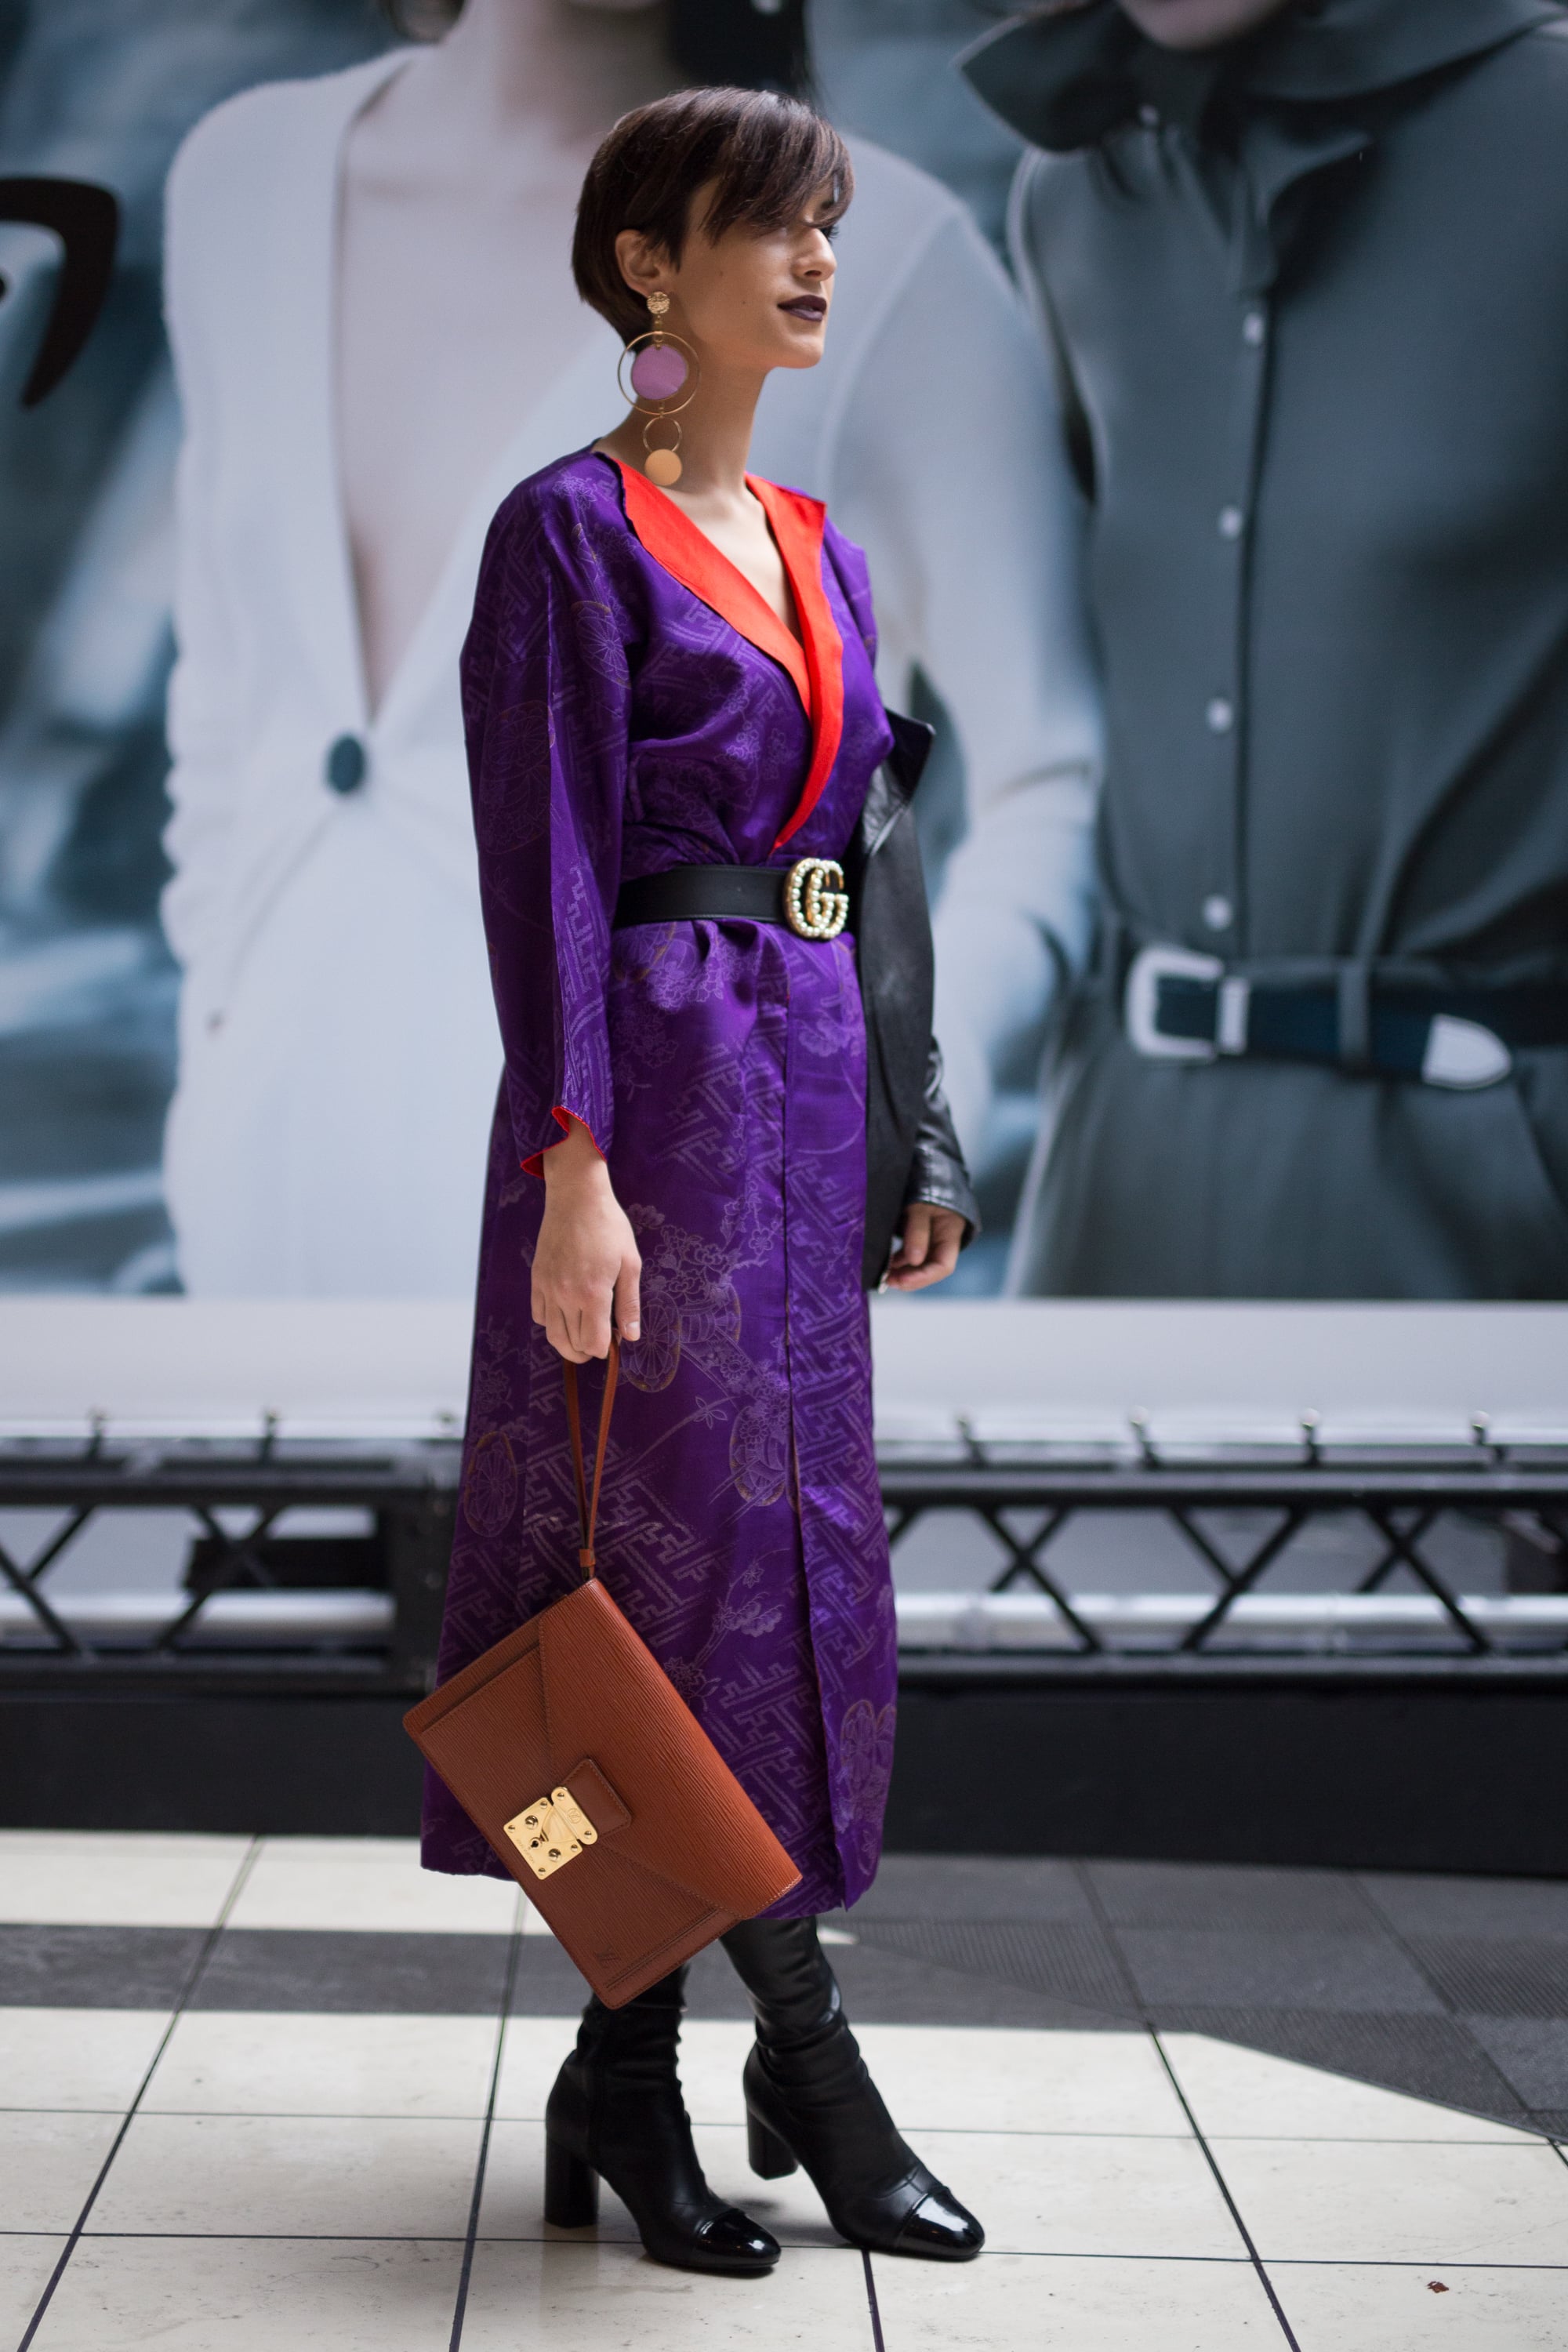 How to Wear Ultra Violet | POPSUGAR Fashion